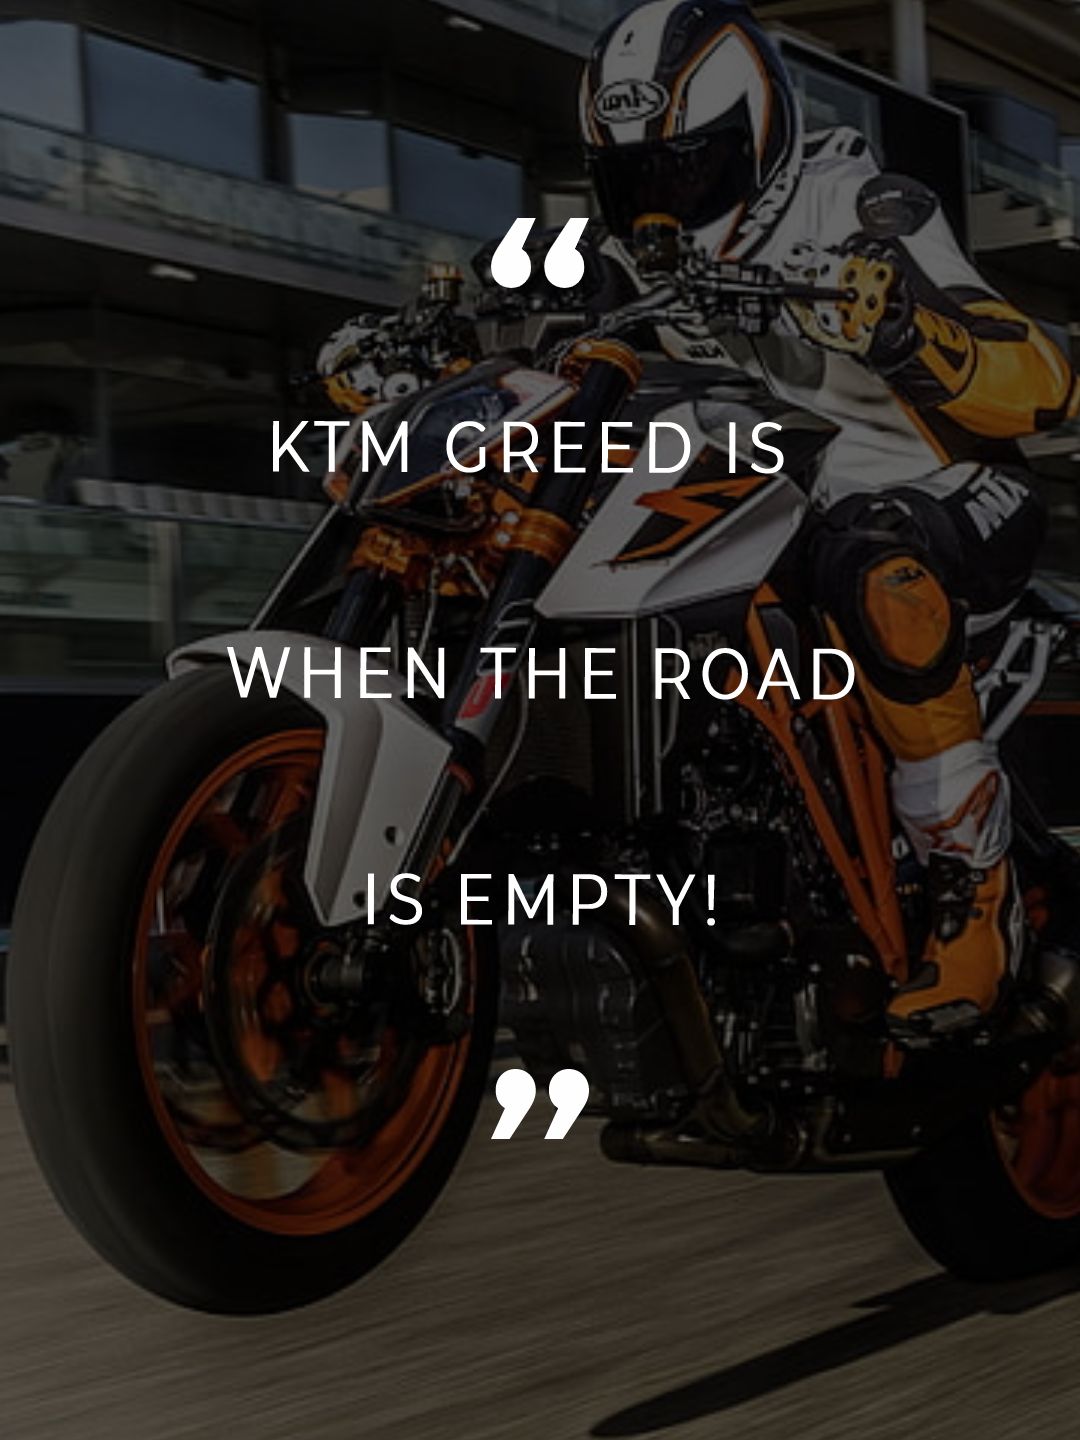 Ktm Greed is When the Road is Empty! - KTM Bike Status 